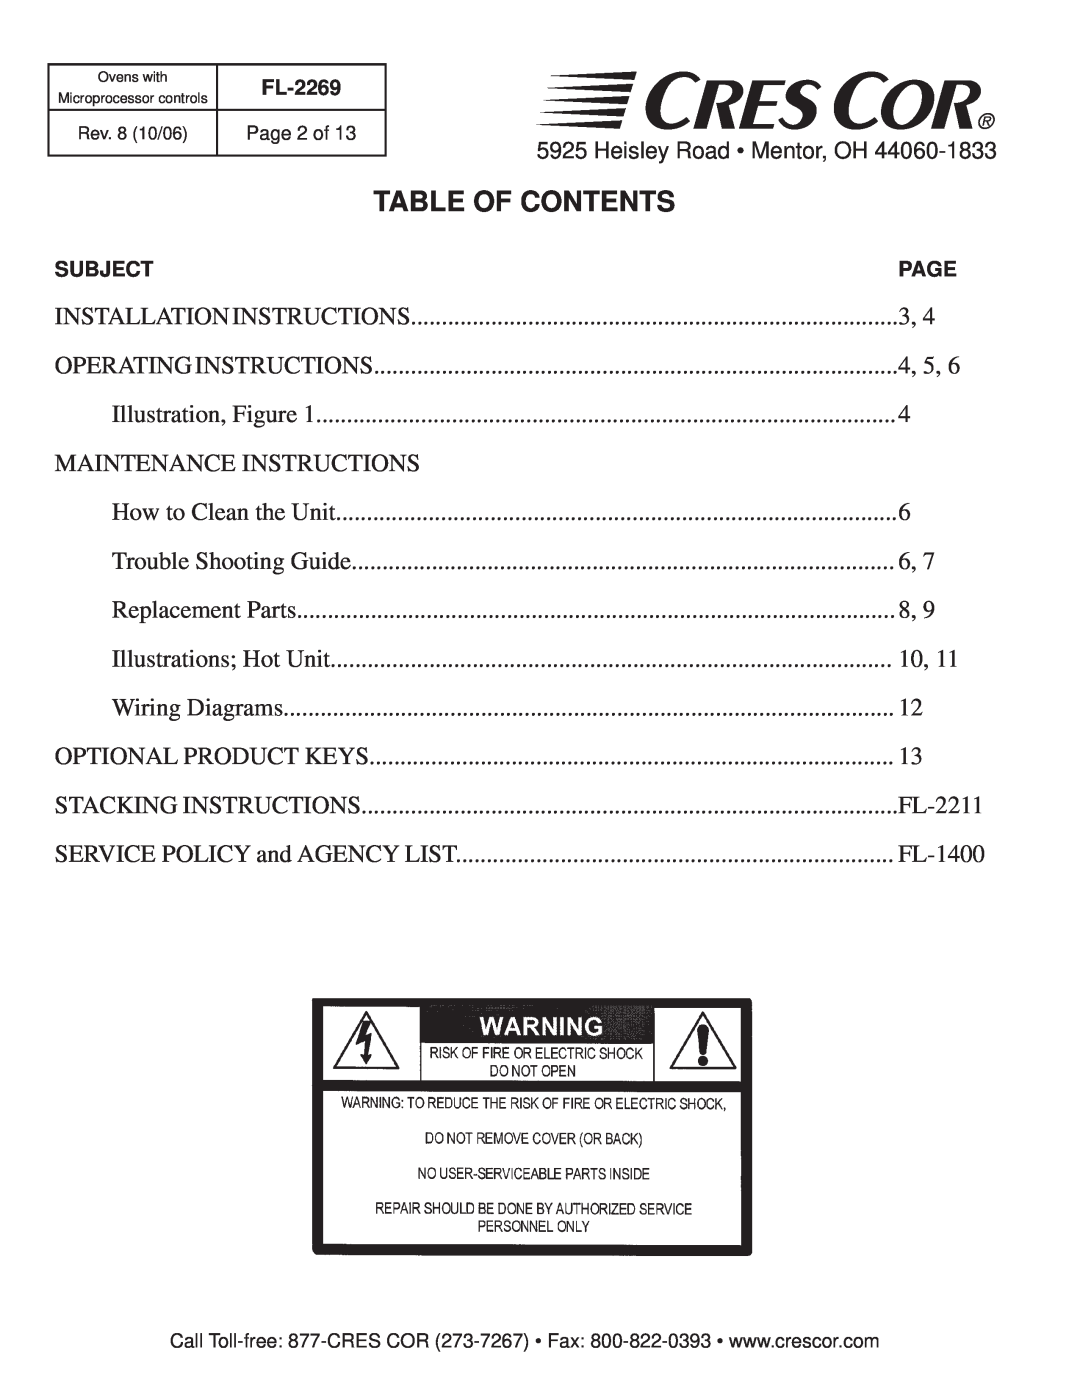 Cres Cor CO151H189B-Q1 manual Table Of Contents, Maintenance Instructions, FL-2211, FL-1400 